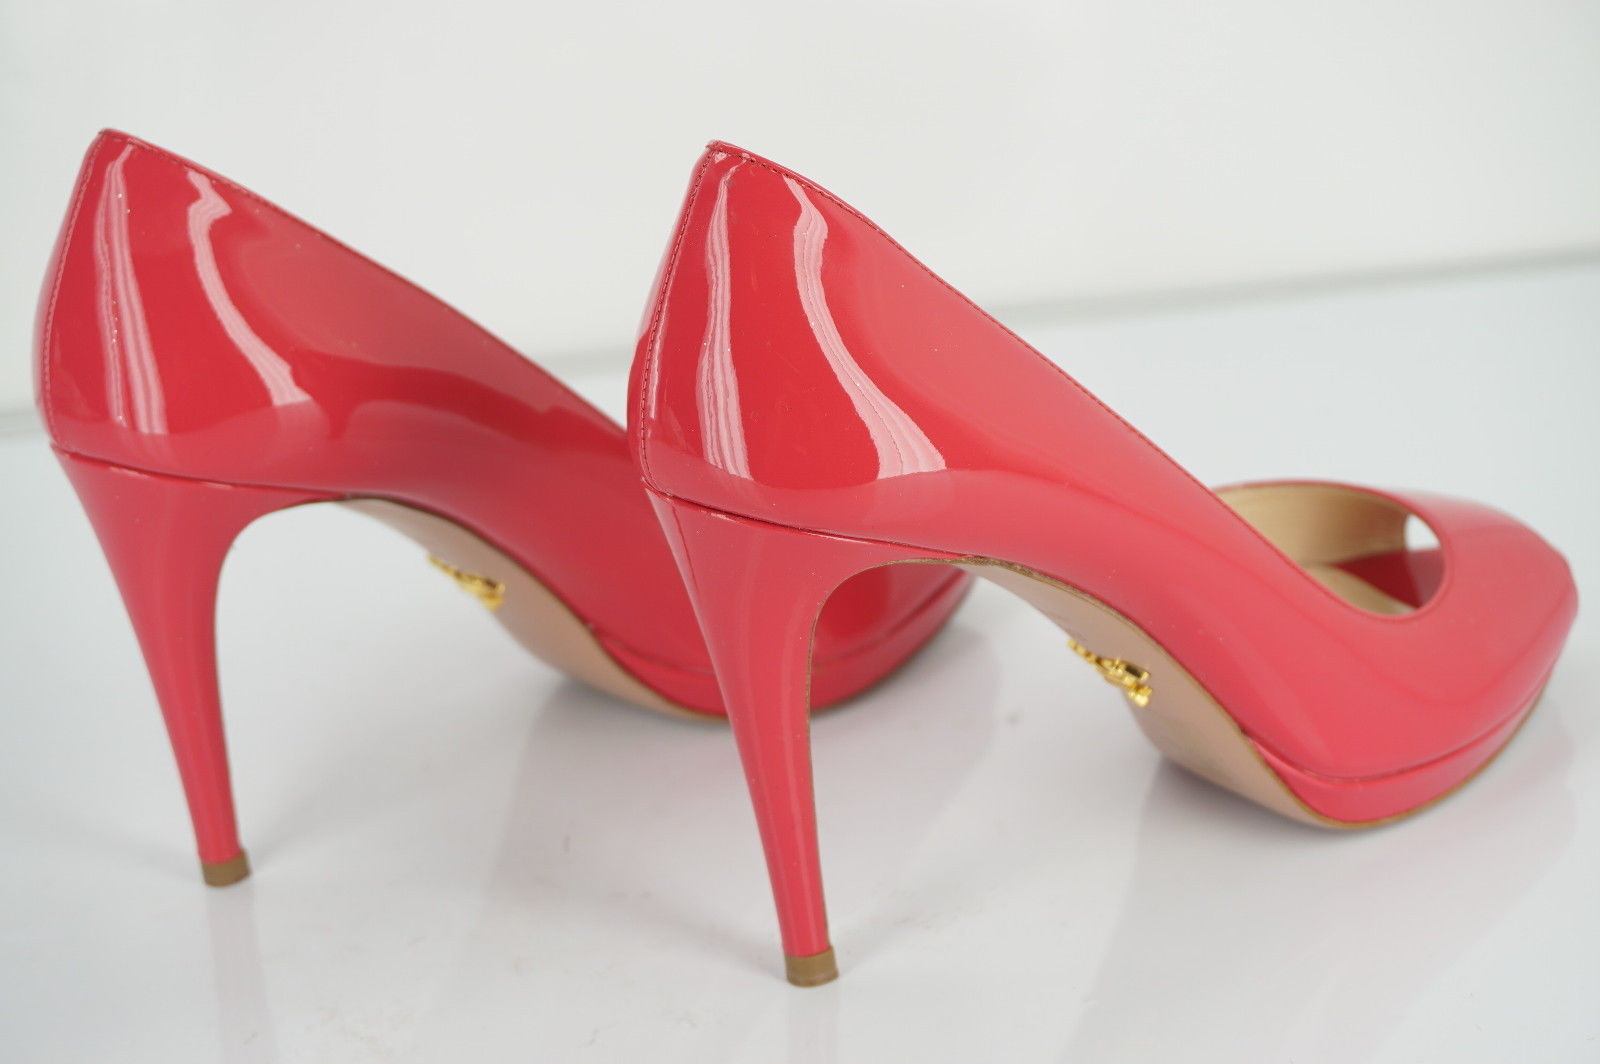 Prada Pink Patent Leather Open Toe Platform High Heel Pumps Size 39 NIB $650